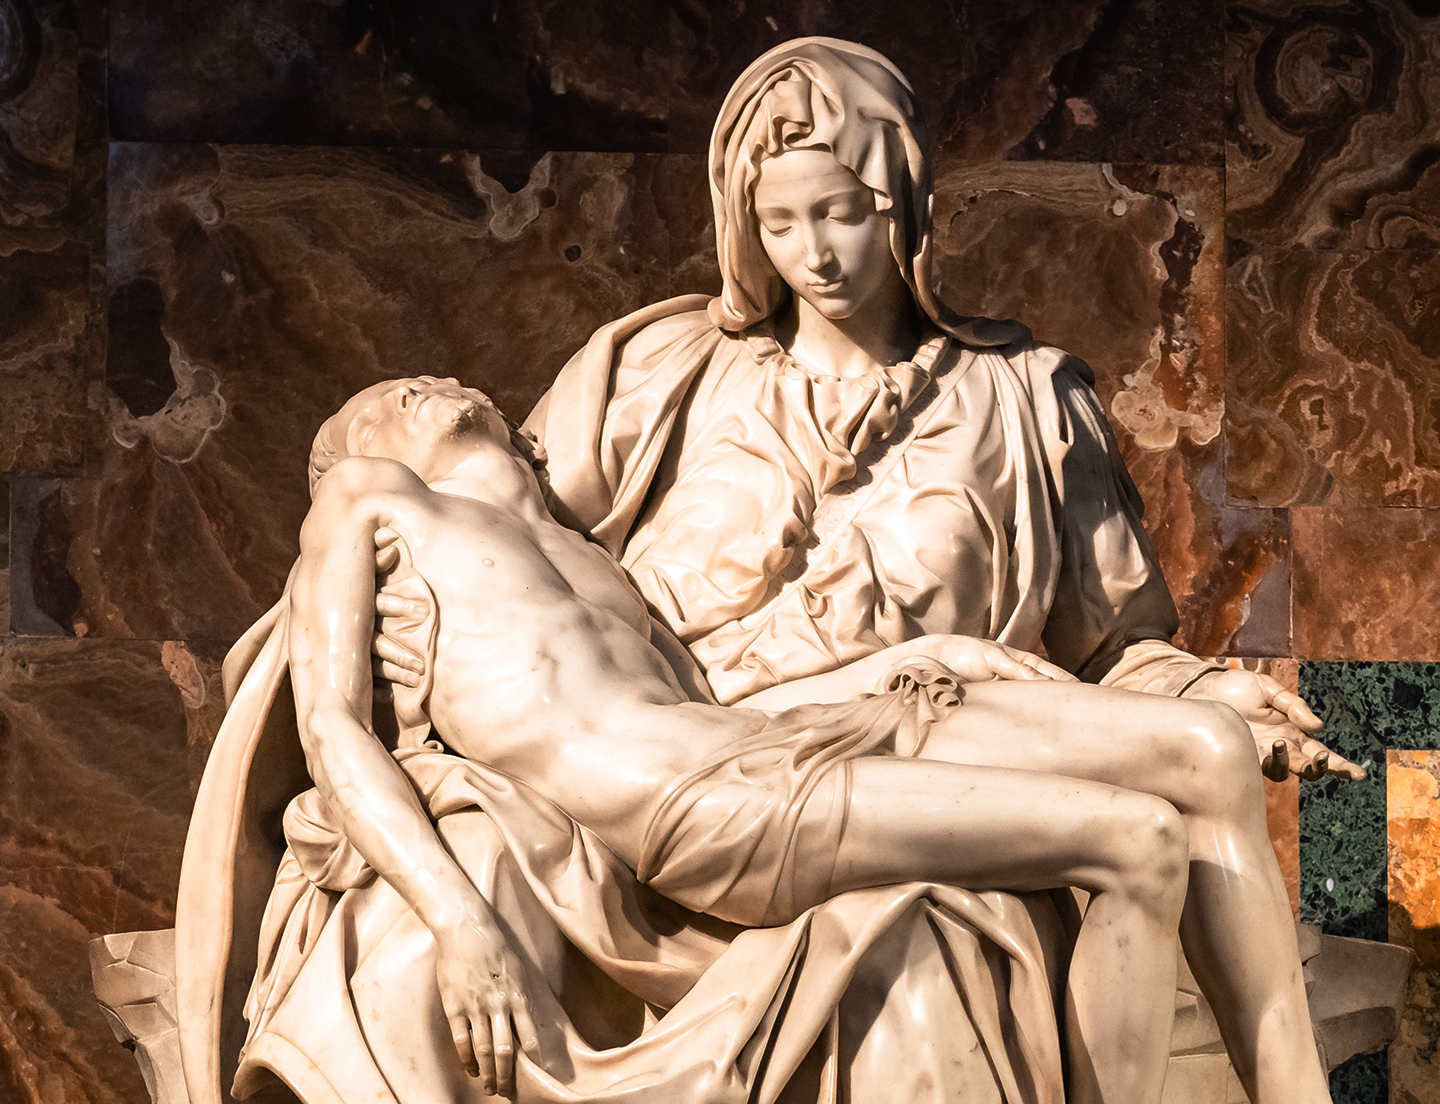 Detail from Michelangelo's "Pietà." (PhotoFires/Shutterstock)